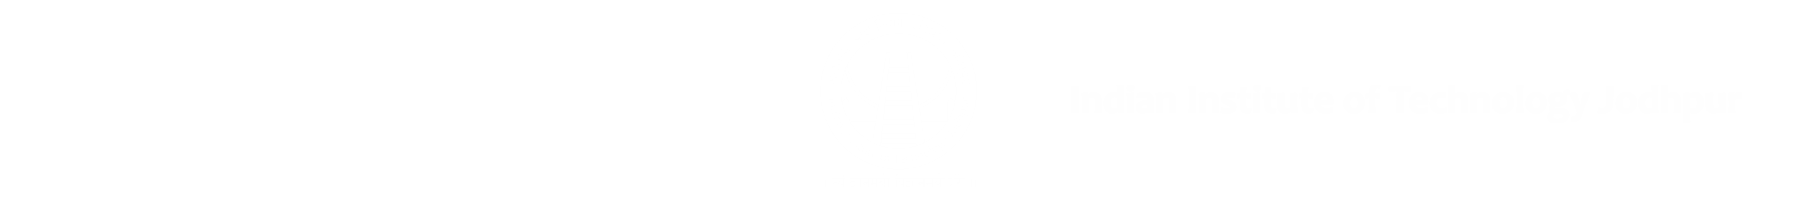 Indian Institute of Technology Jodhpur logo